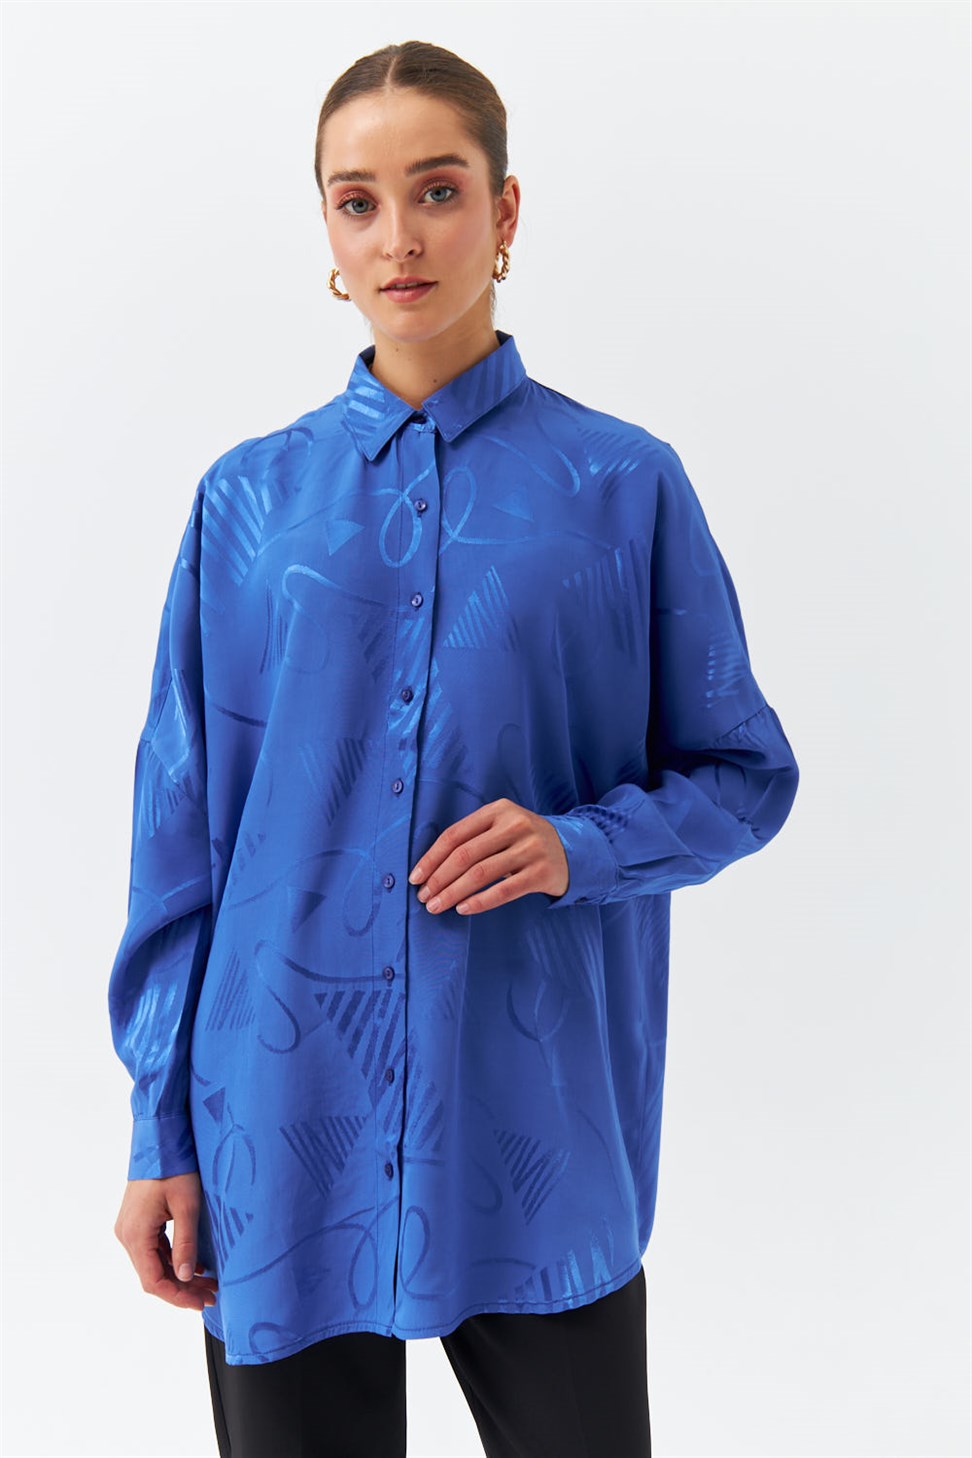 Modest Jacquard Patterned Oversize Blue Womens Shirt